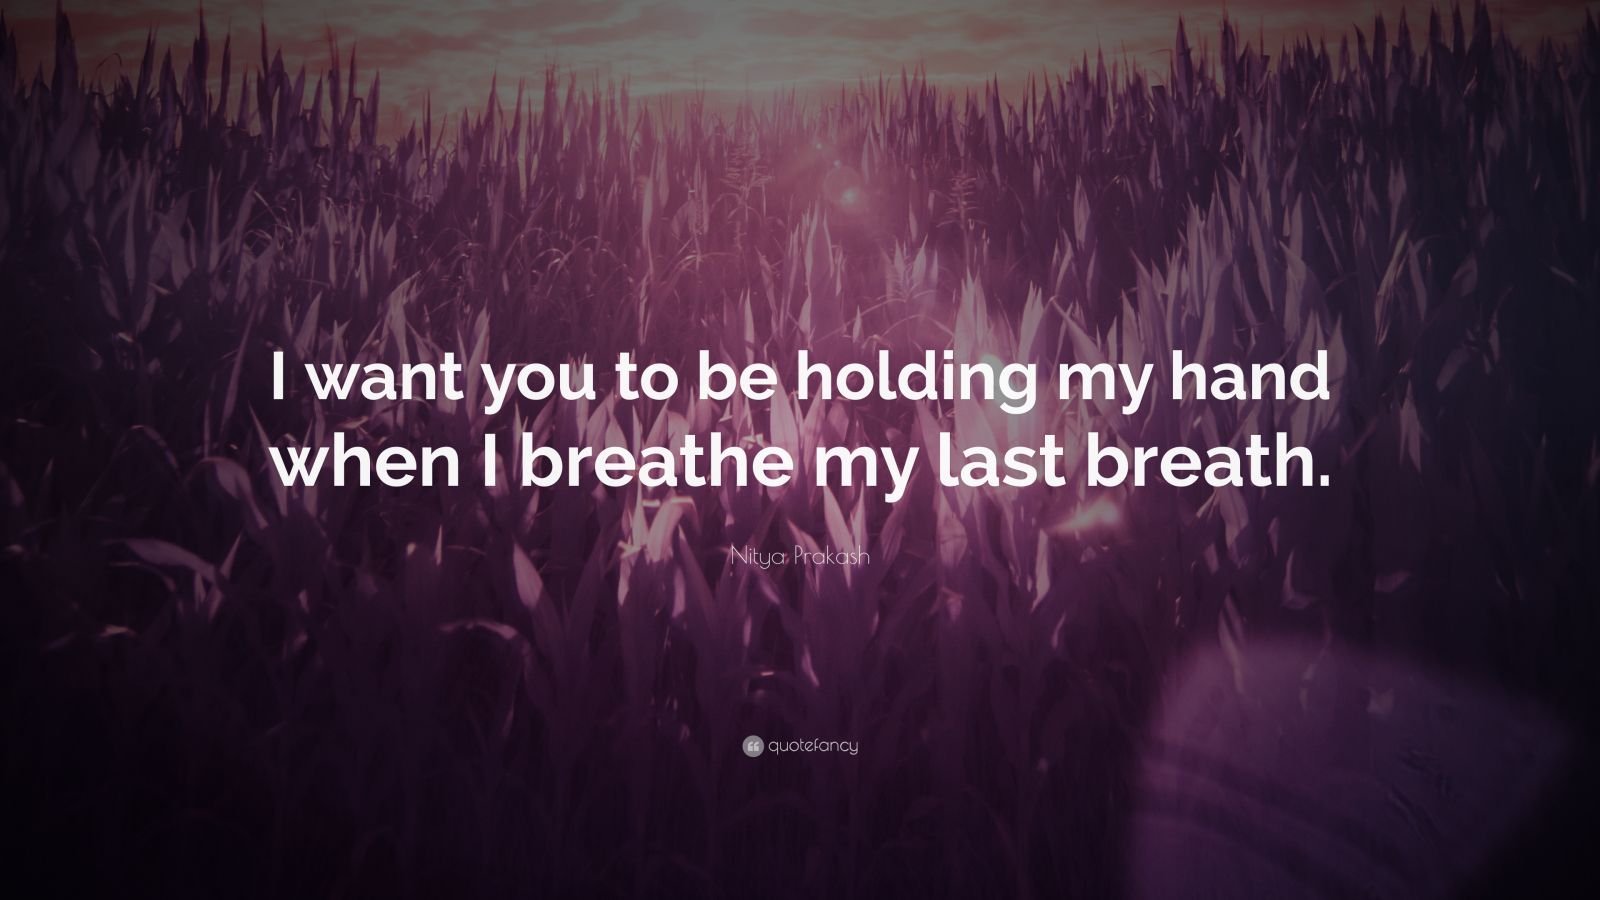 Nitya Prakash Quote: “I want you to be holding my hand when I breathe ...